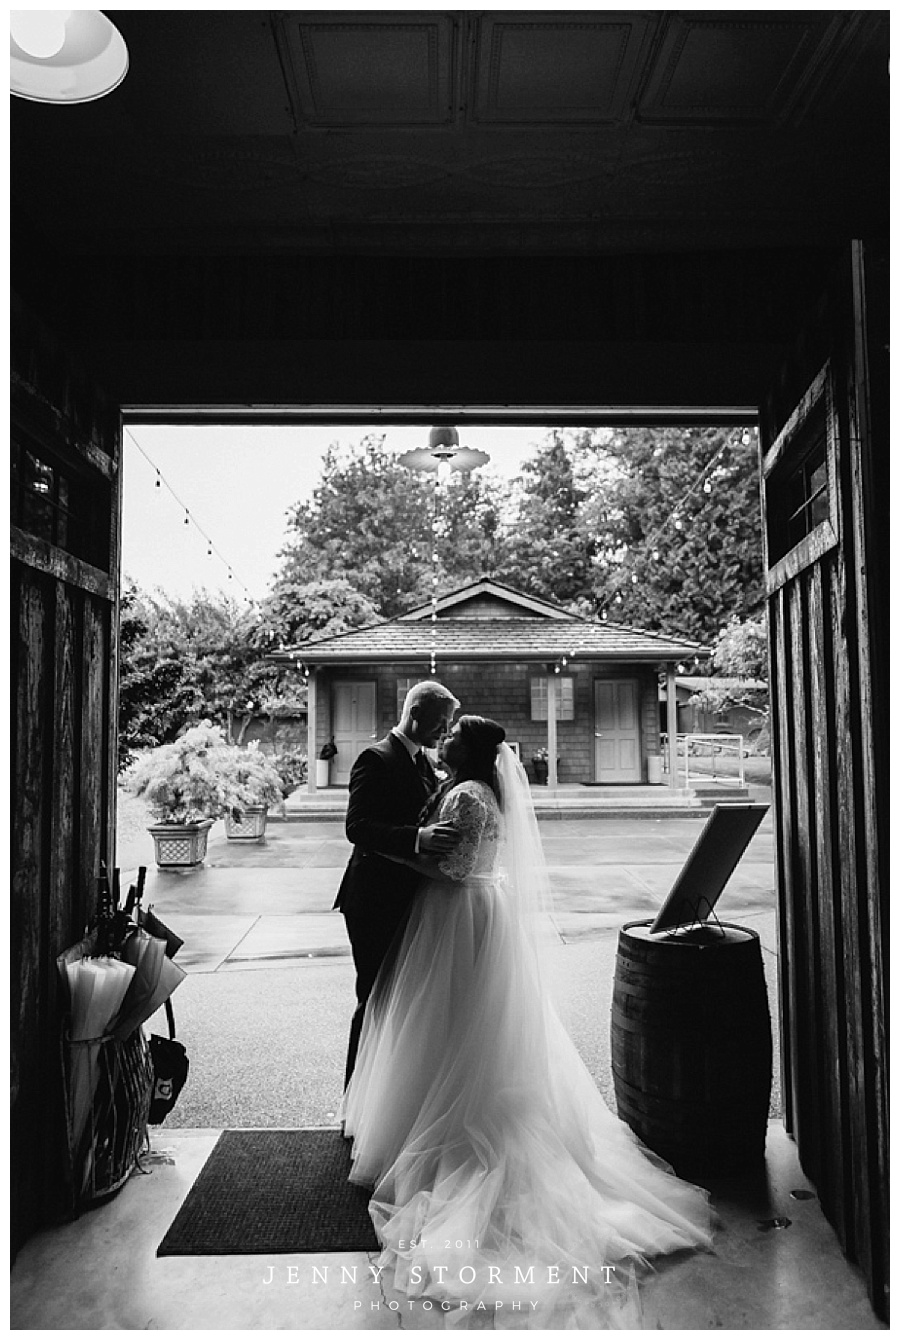 Red Cedar Farms wedding photos by Jenny Storment Photography-61